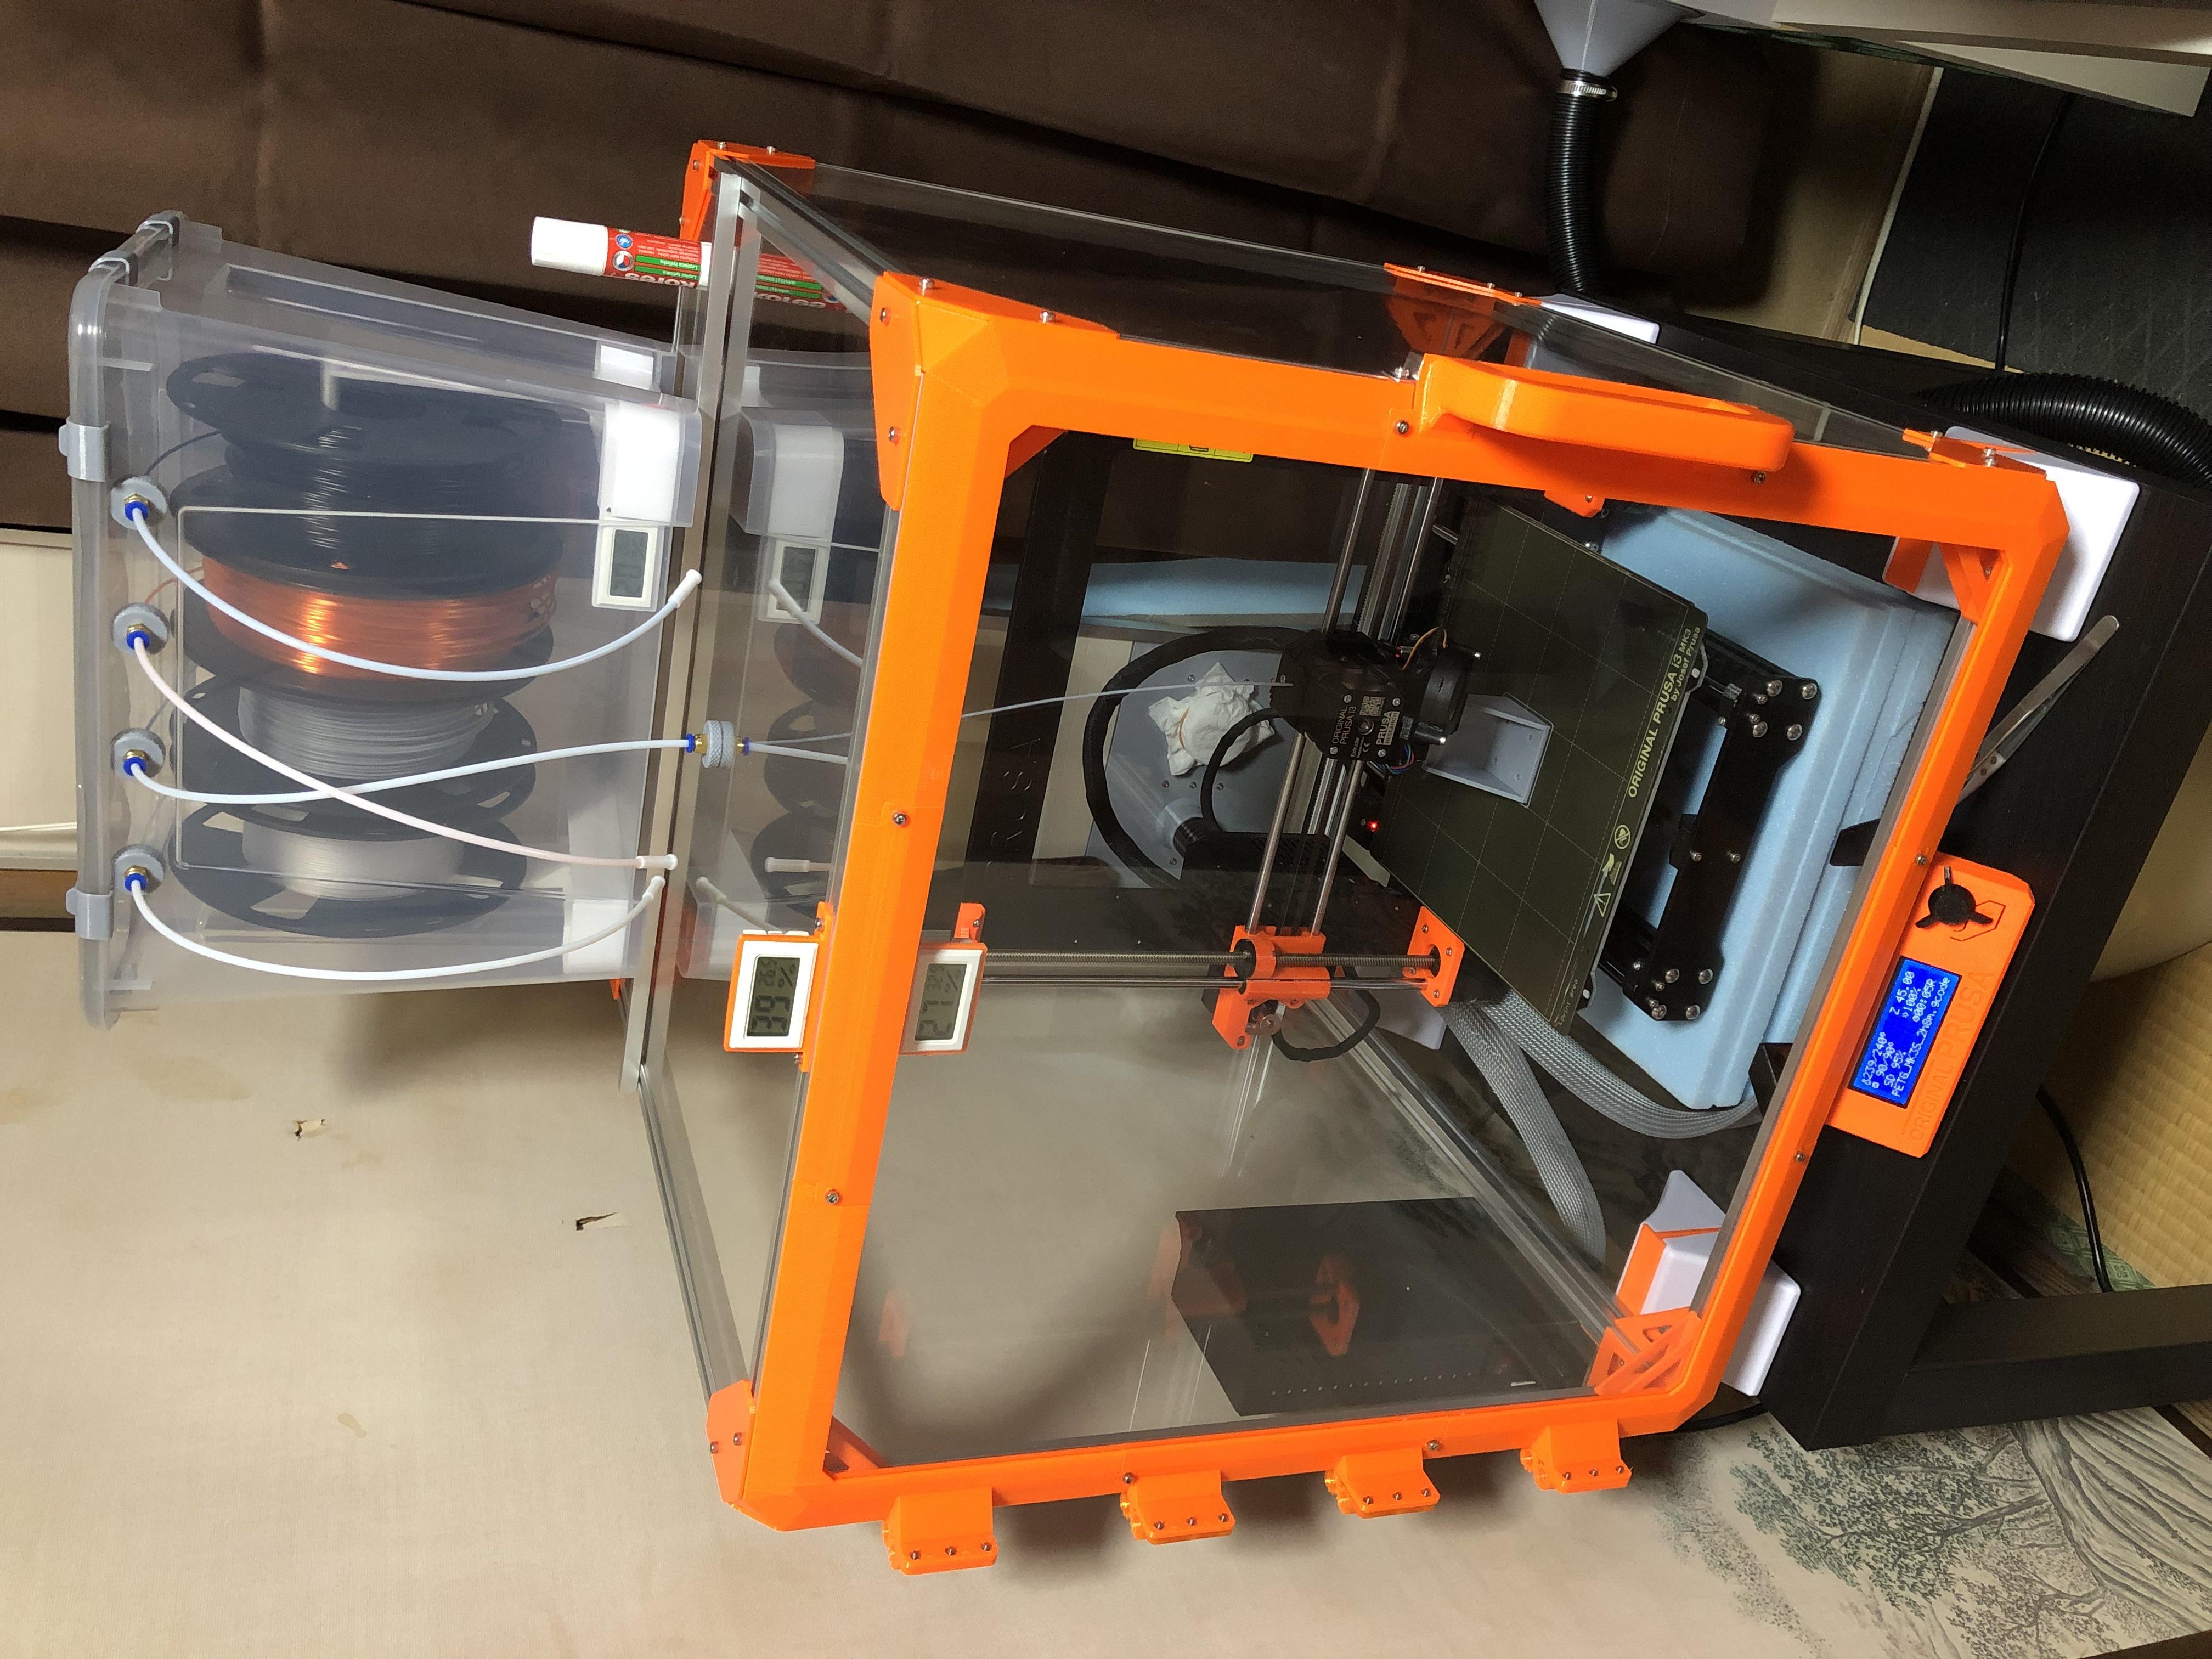 3D Printer Enclosure using 500mm square acrylic panel